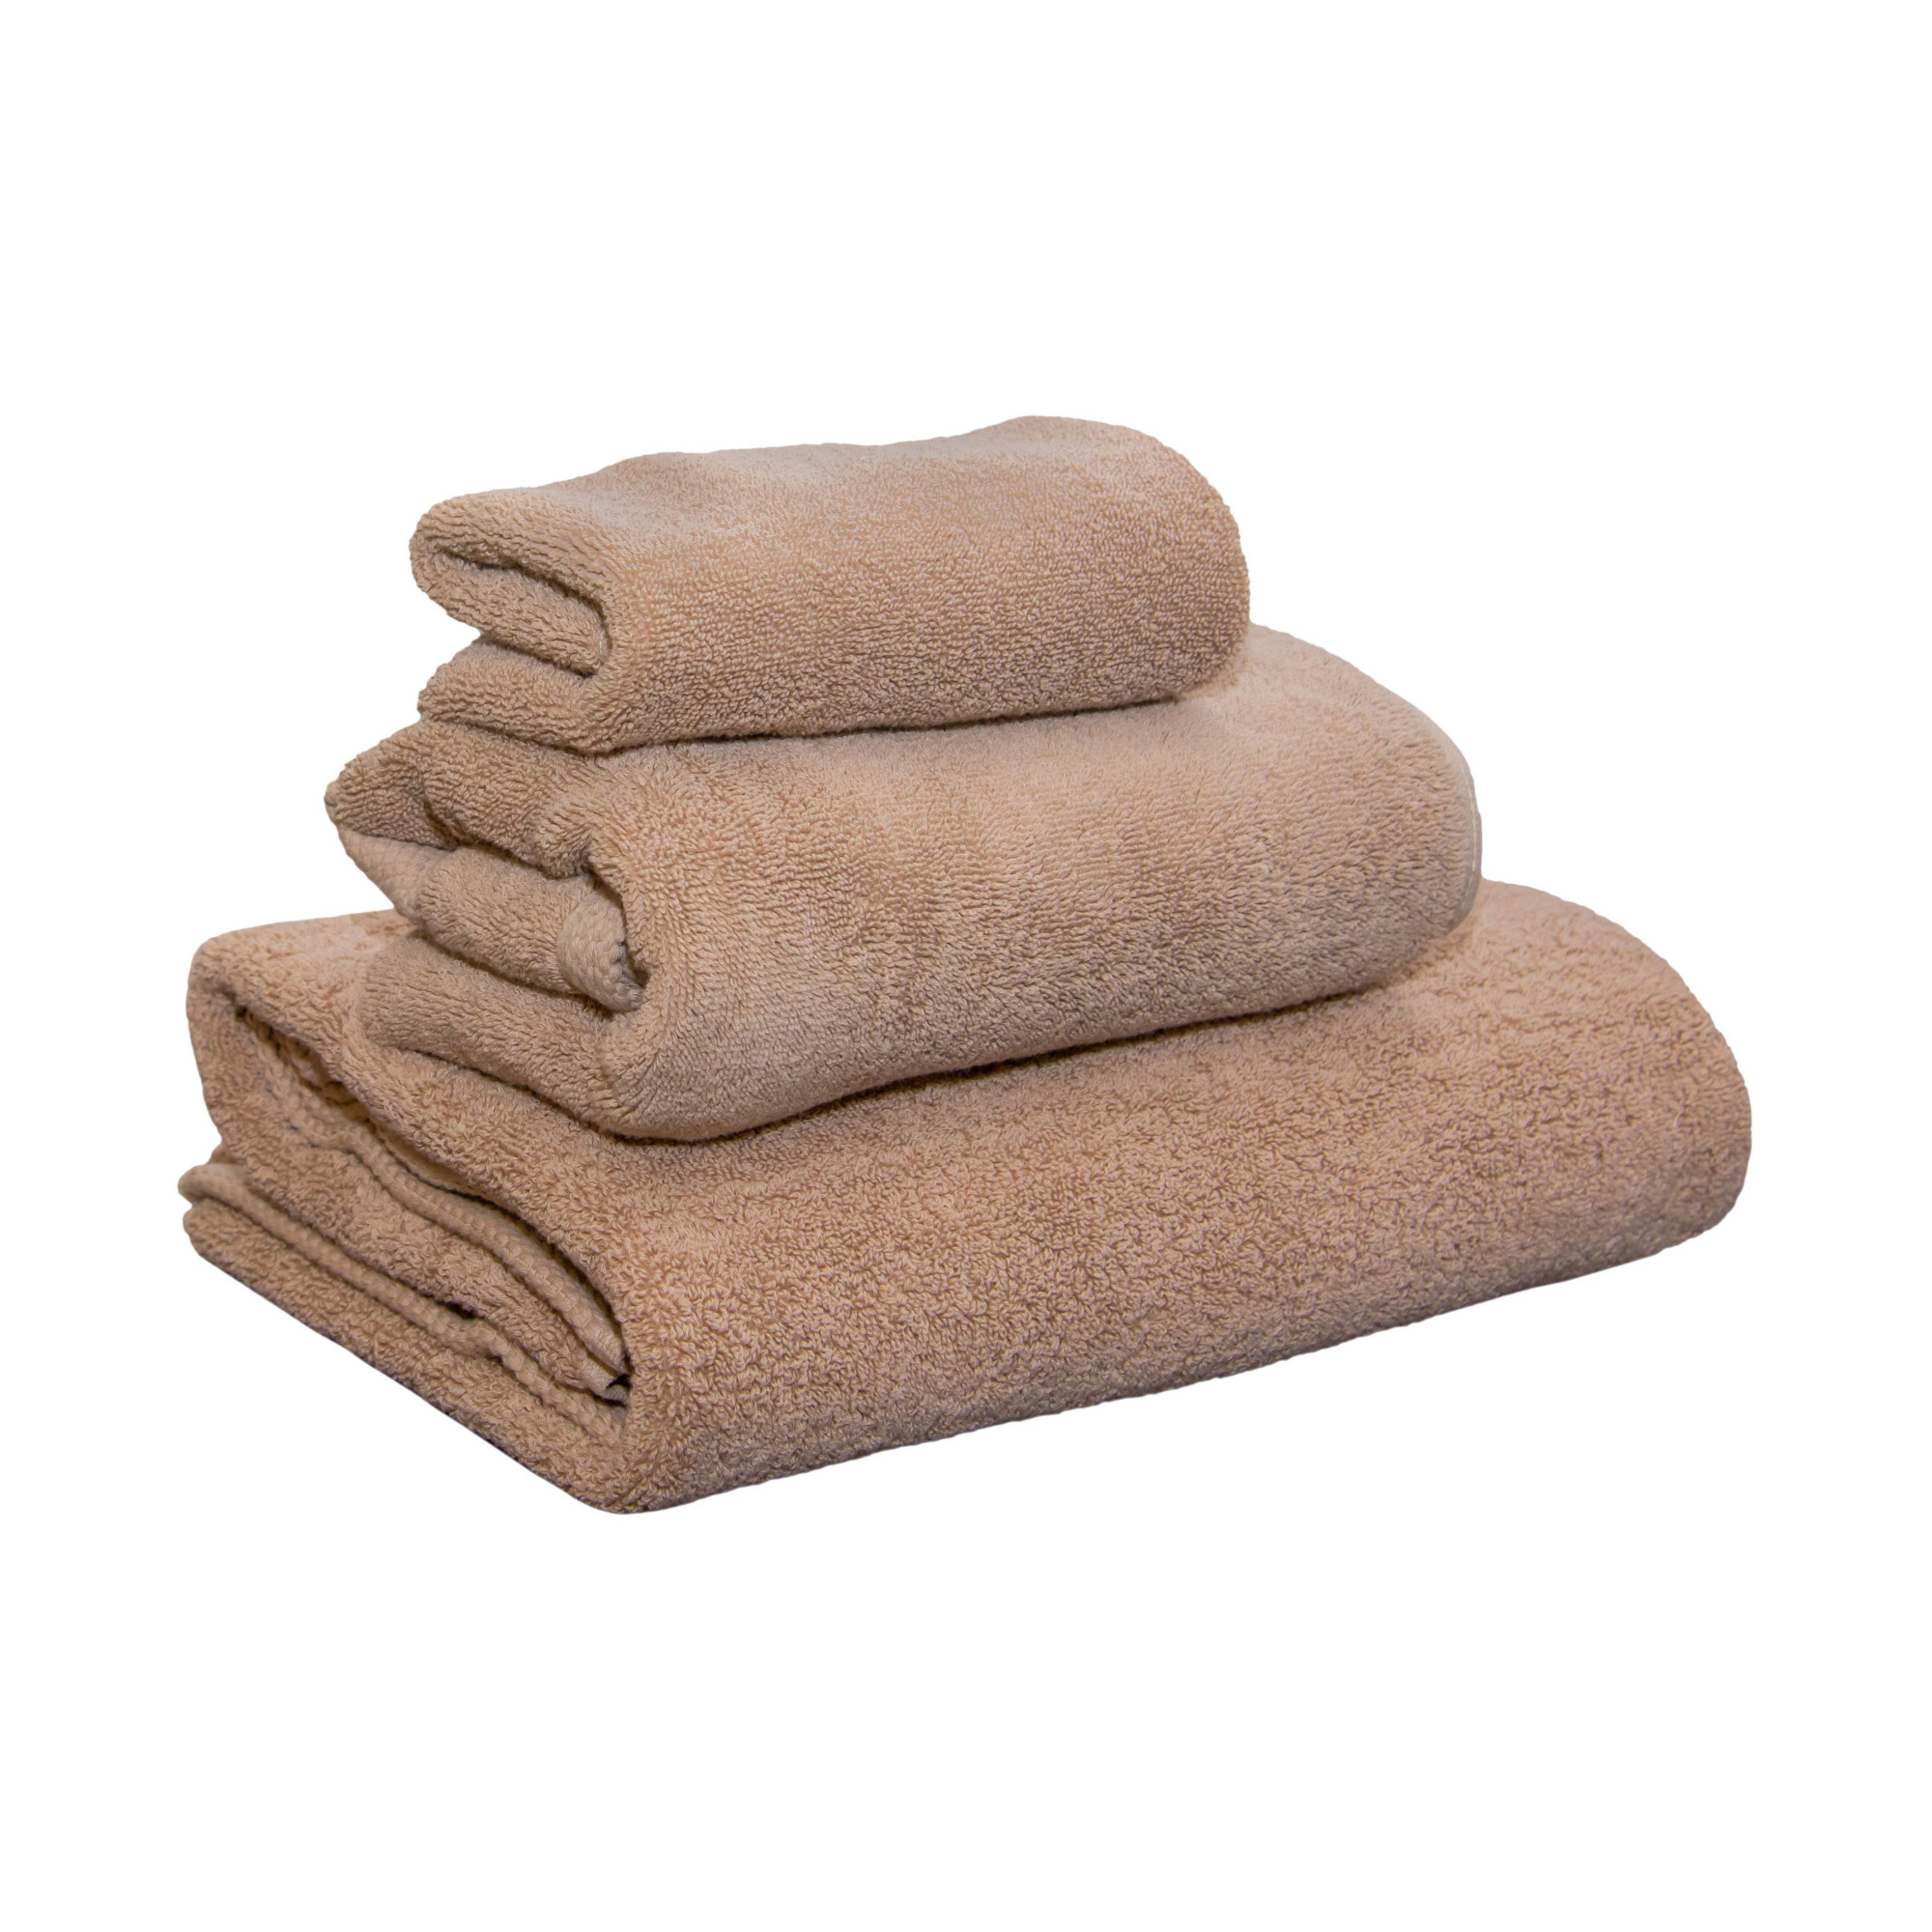 Terry towel 70X140, cuban sand, 100% cotton